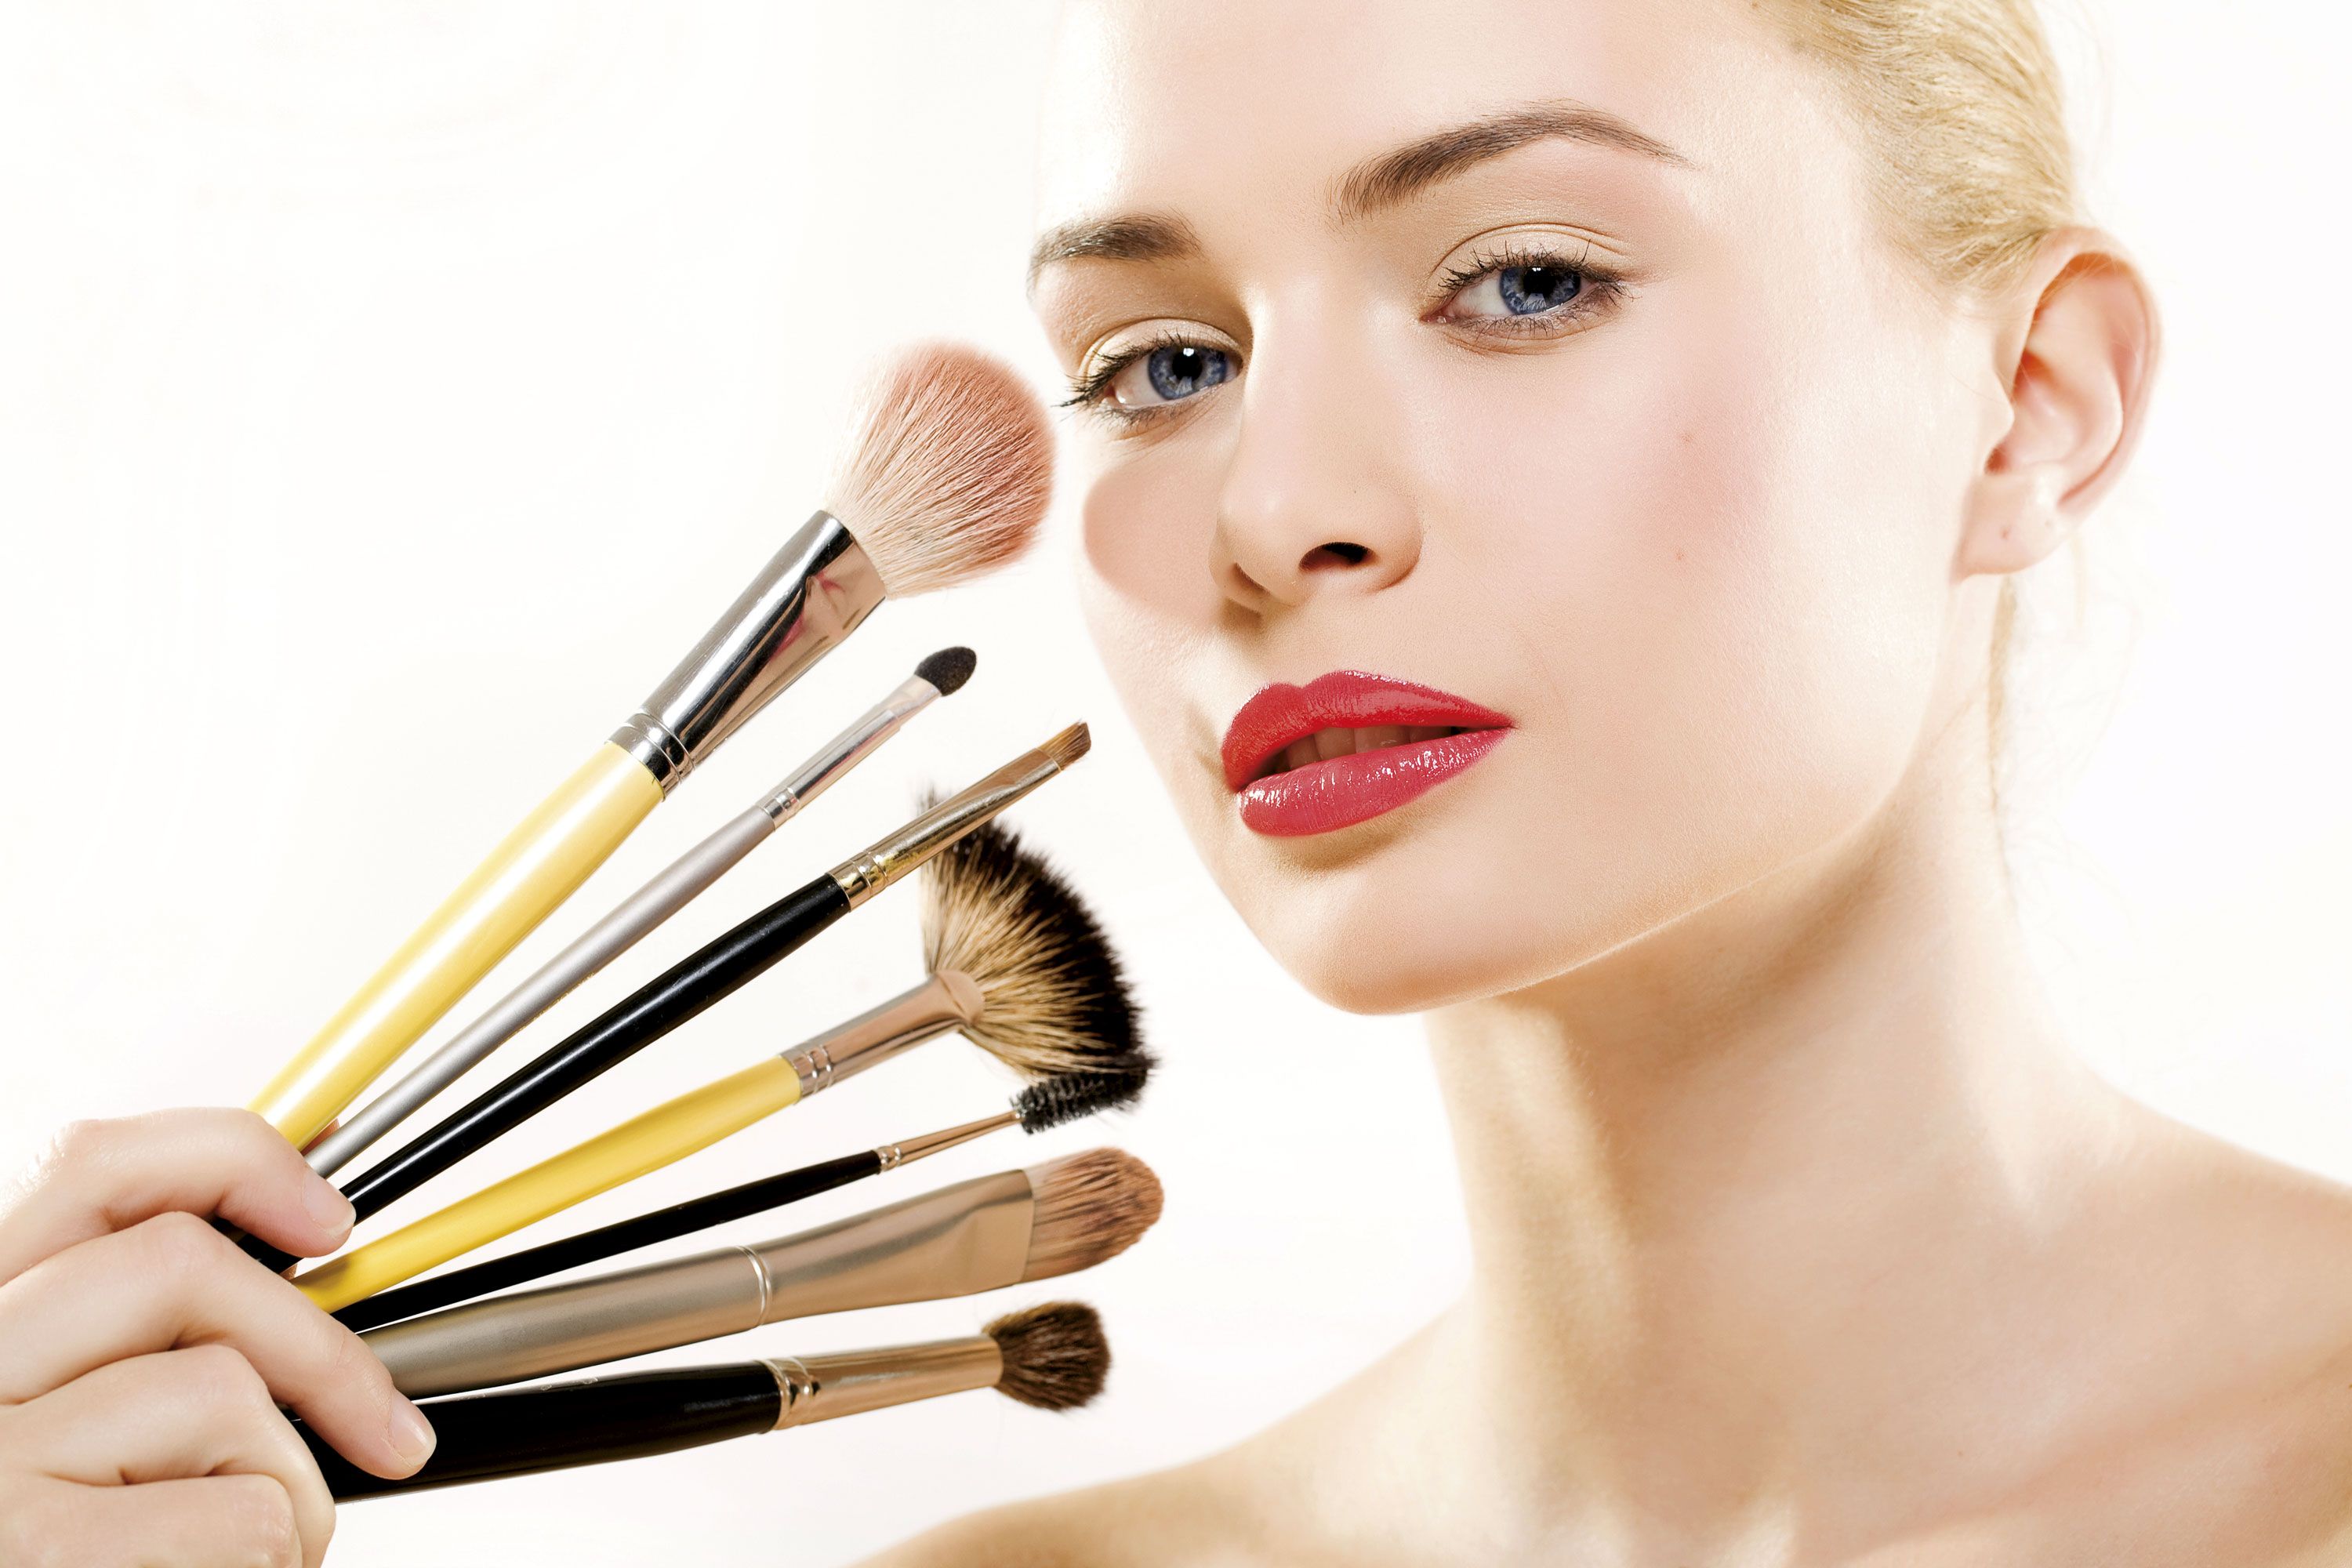 Limpiador de Brochas para Maquillaje Cleaning Gel Makeup Brush